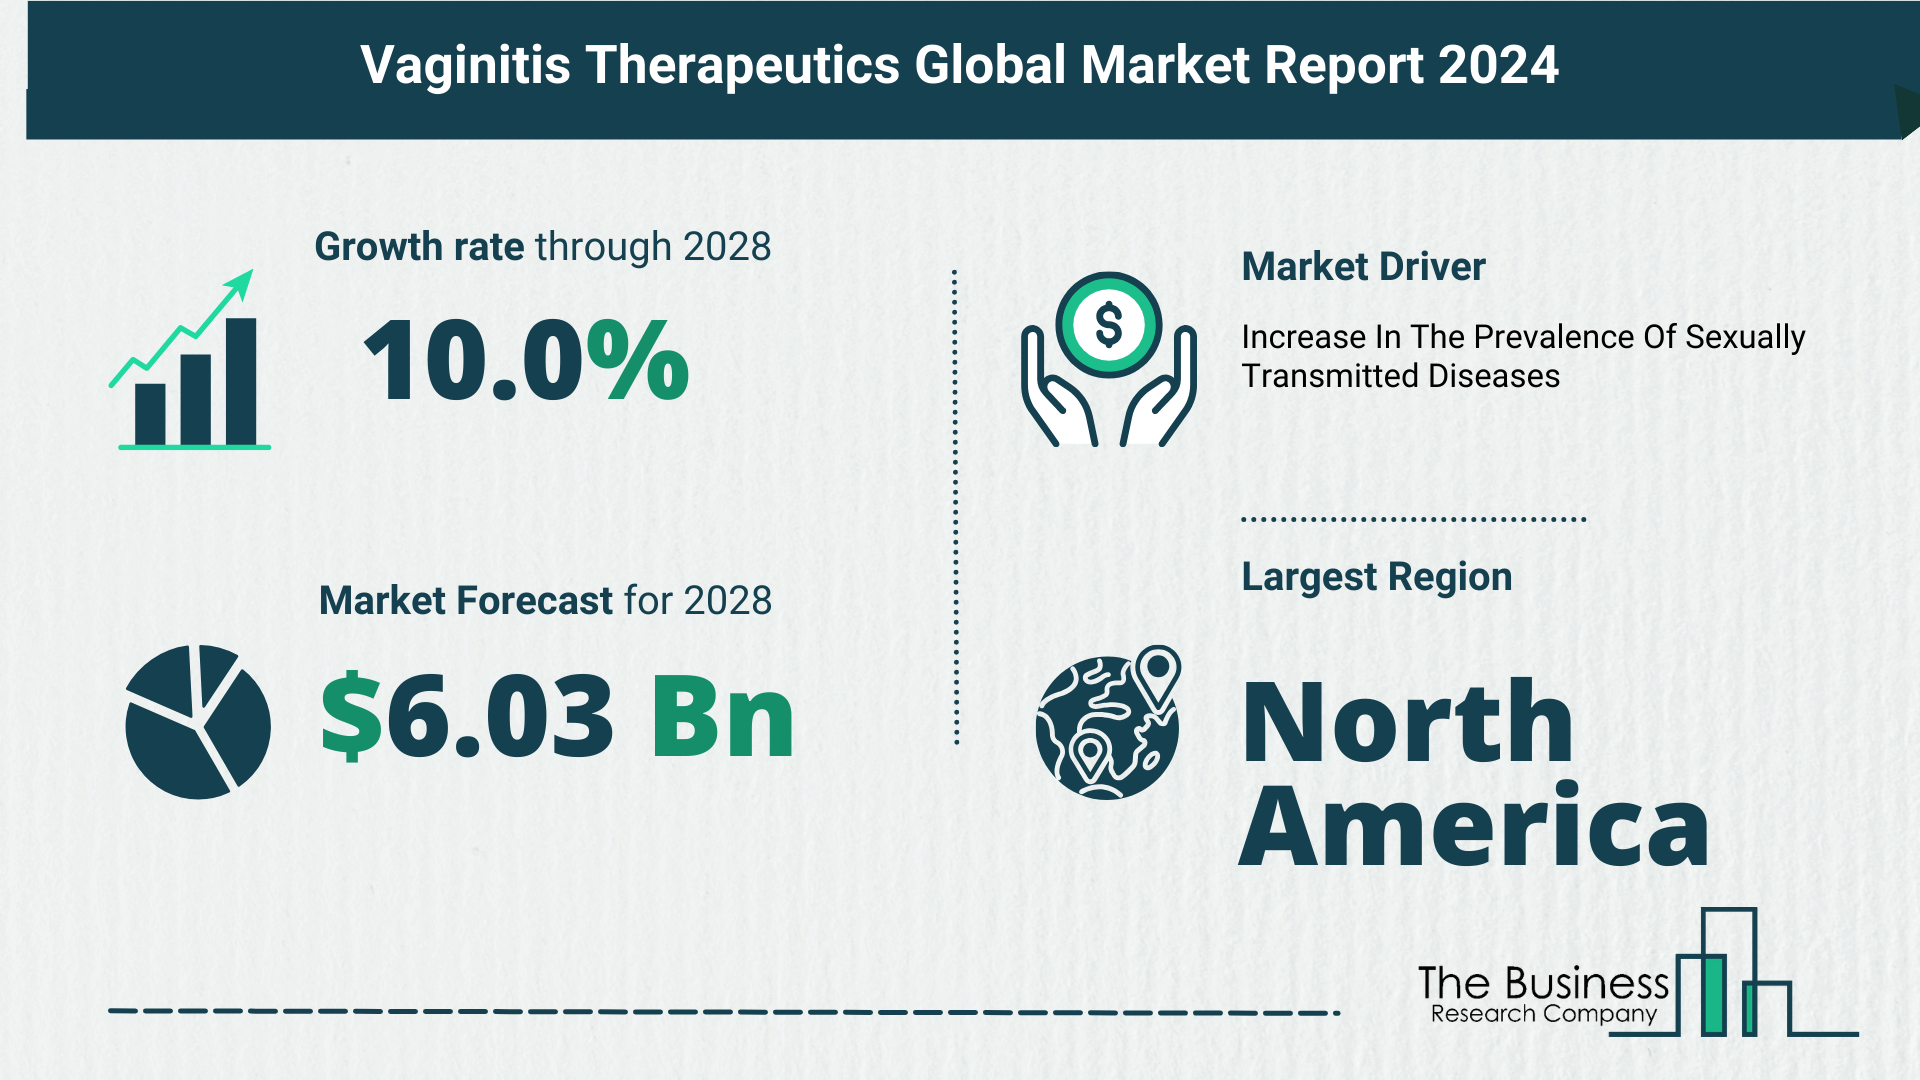 Global Vaginitis Therapeutics Market